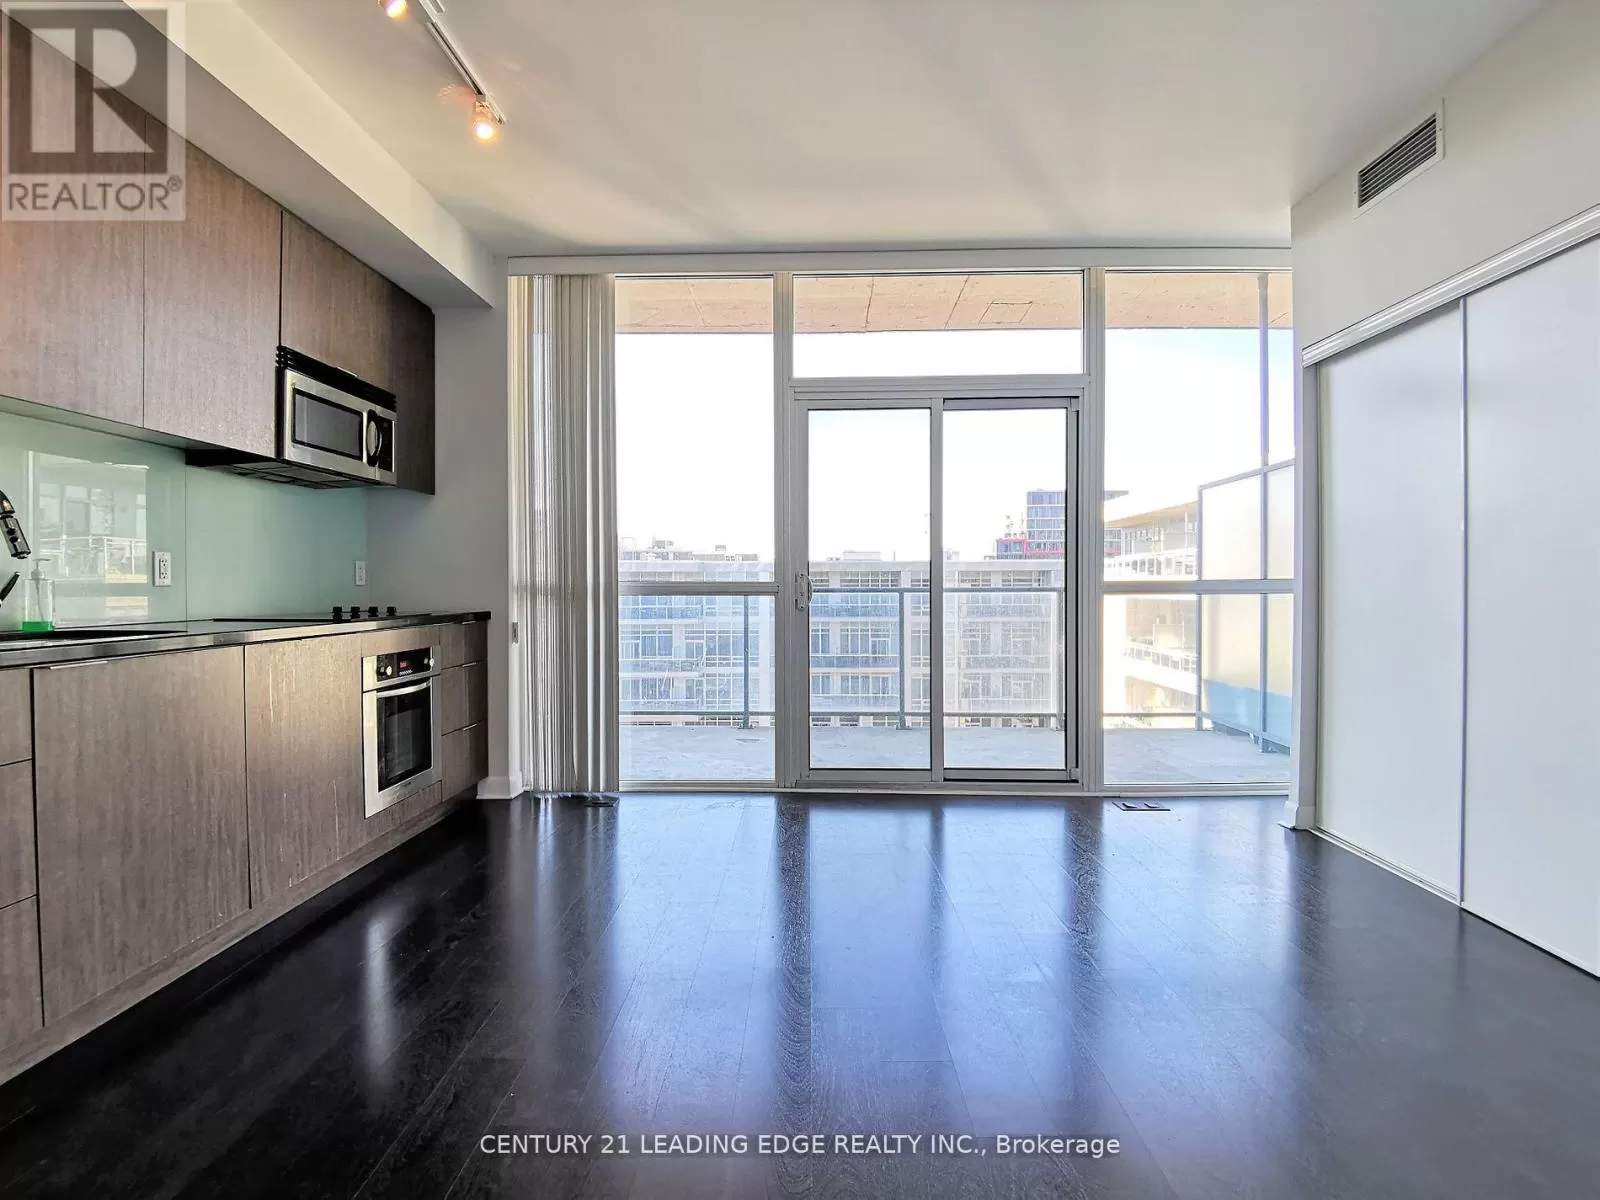 Apartment for rent: 1114 - 478 King Street W, Toronto, Ontario M5V 0A8